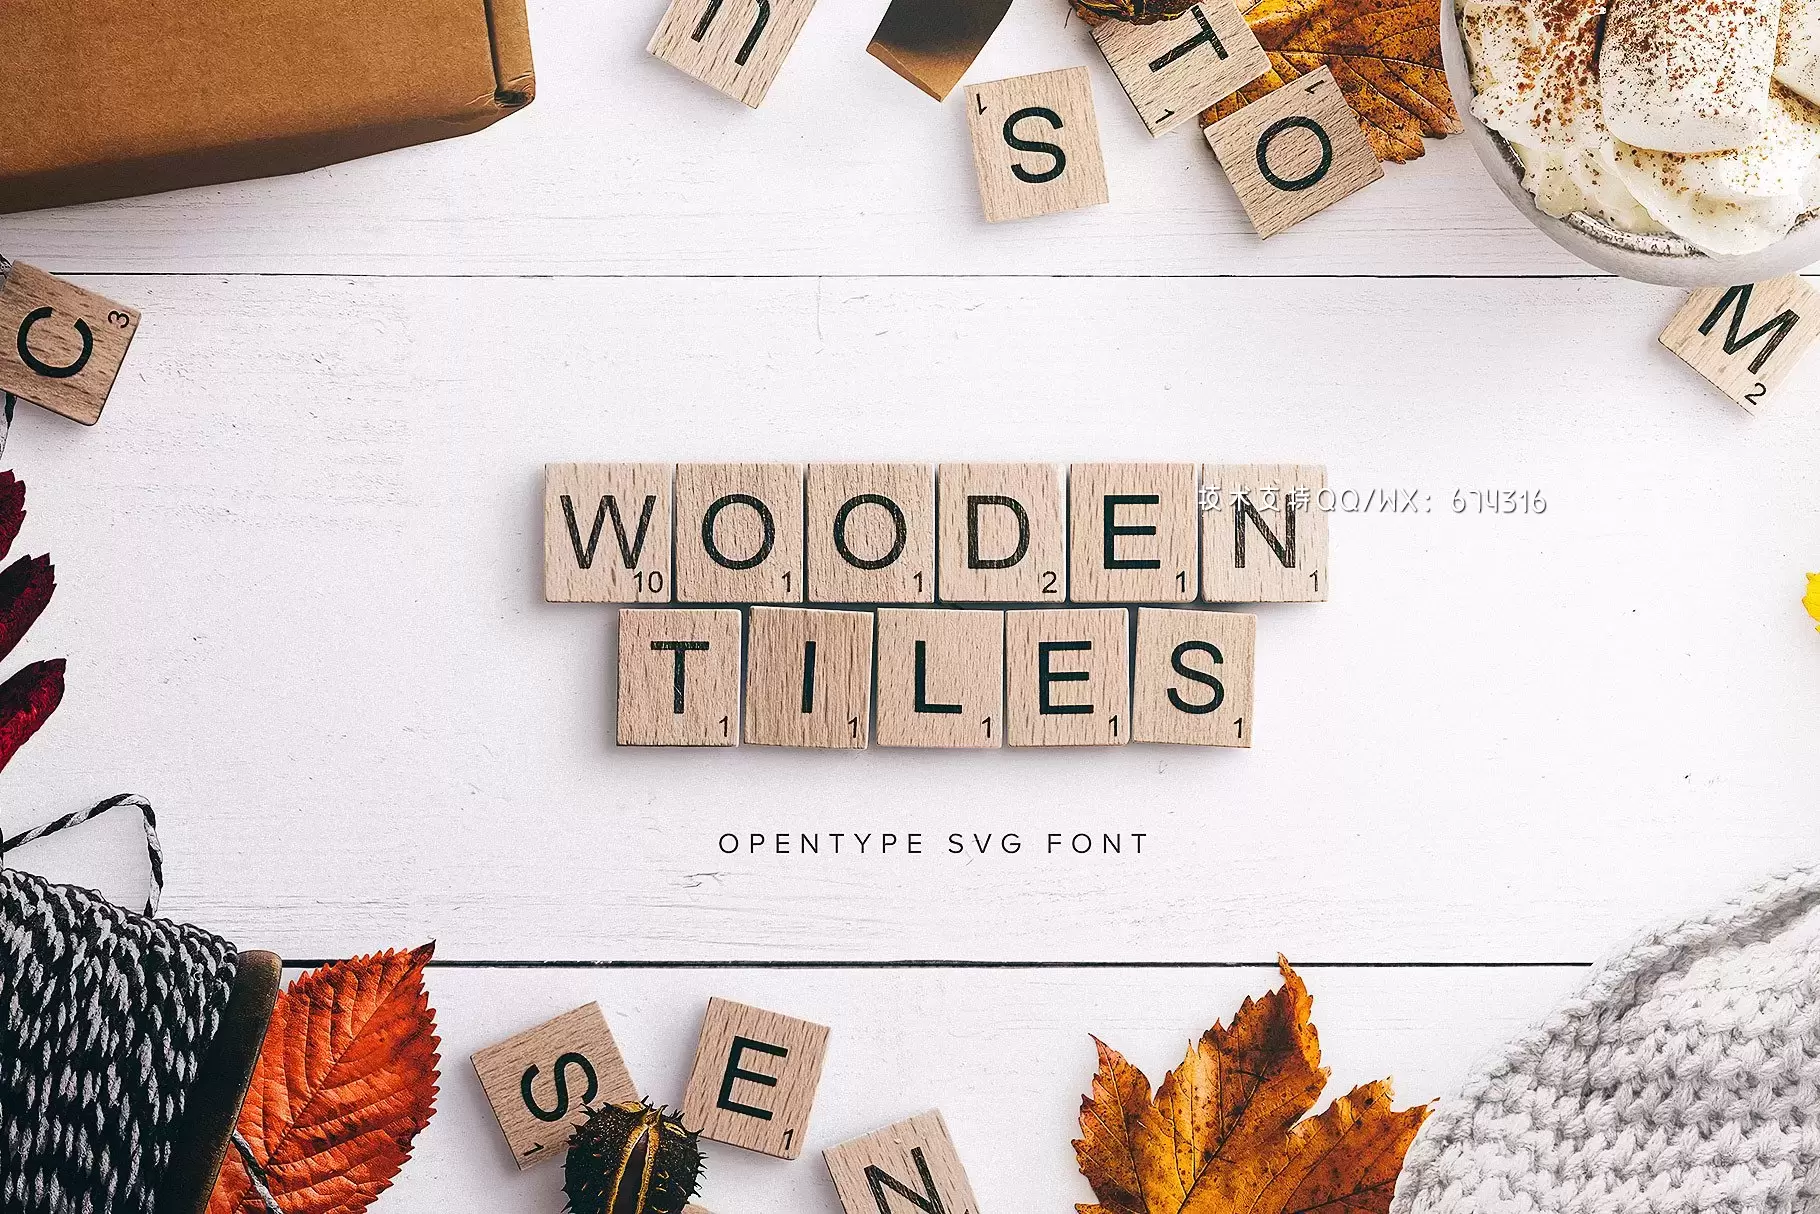 木纹字体 Wooden Tiles Font免费下载